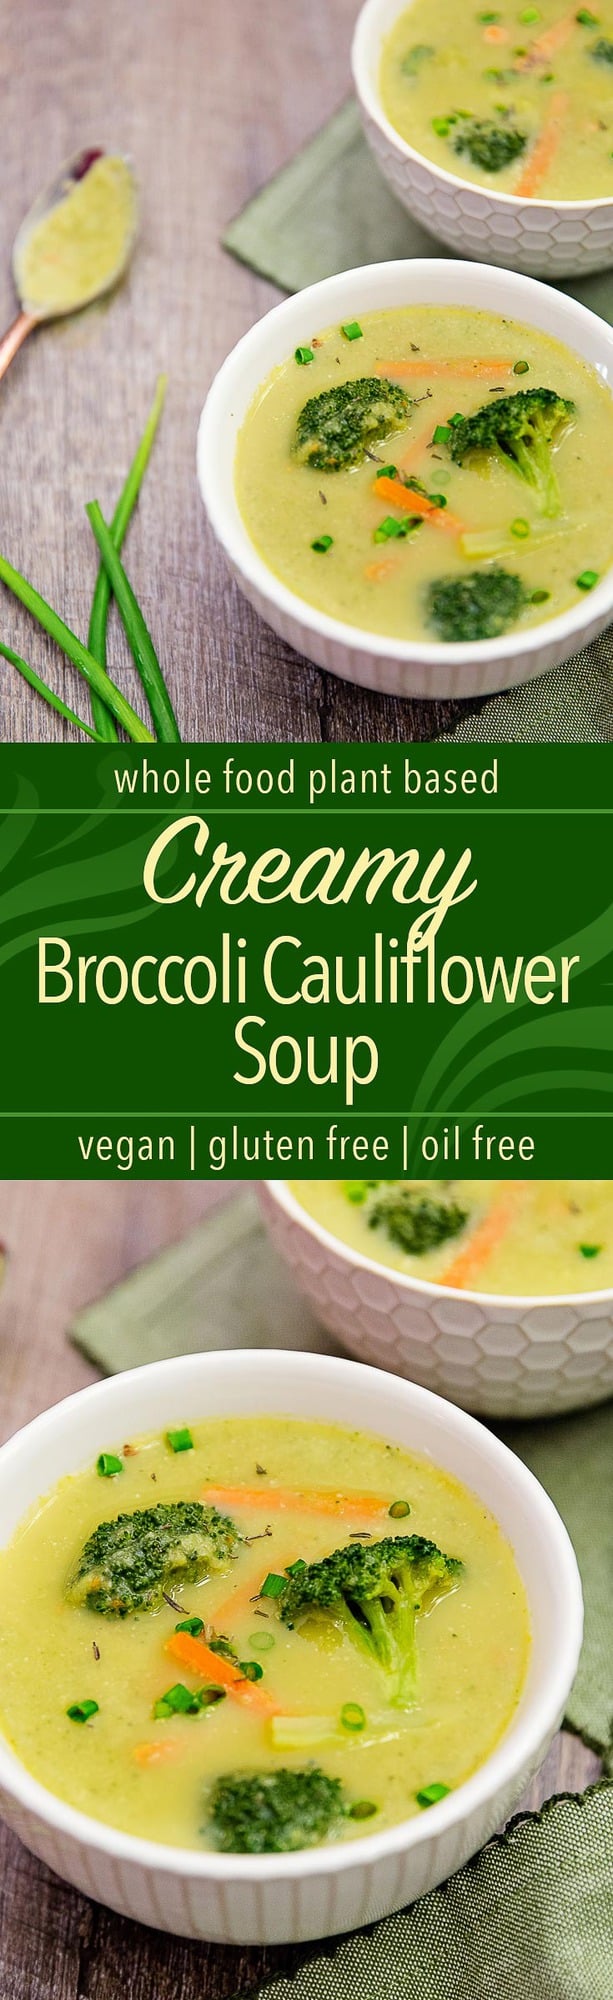 creamy broccoli cauliflower soup, creamy broccoli soup, creamy cauliflower soup, broccoli cauliflower soup, broccoli soup, cauliflower soup, broccoli, cauliflower, soup, vegan creamy broccoli cauliflower soup, vegan creamy broccoli soup, vegan creamy cauliflower soup, vegan broccoli cauliflower soup, vegan broccoli soup, vegan cauliflower soup, vegan broccoli, vegan cauliflower, vegan soup, vegan, vegetarian creamy broccoli cauliflower soup, vegetarian creamy broccoli soup, vegetarian creamy cauliflower soup, vegetarian broccoli cauliflower soup, vegetarian broccoli soup, vegetarian cauliflower soup, vegetarian broccoli, vegetarian cauliflower, vegetarian soup, vegetarian, whole food plant based creamy broccoli cauliflower soup, whole food plant based creamy broccoli soup, whole food plant based creamy cauliflower soup, whole food plant based broccoli cauliflower soup, whole food plant based broccoli soup, whole food plant based cauliflower soup, whole food plant based broccoli, whole food plant based cauliflower, whole food plant based soup, whole food plant based, gluten free creamy broccoli cauliflower soup, gluten free creamy broccoli soup, gluten free creamy cauliflower soup, gluten free broccoli cauliflower soup, gluten free broccoli soup, gluten free cauliflower soup, gluten free broccoli, gluten free cauliflower, gluten free soup, gluten free, creamy soup, vegan creamy soup, vegetarian creamy soup, whole food plant based creamy soup, oil free soup, oil free broccoli, oil free cauliflower, oil free, healthy creamy broccoli cauliflower soup, healthy creamy broccoli soup, healthy creamy cauliflower soup, healthy broccoli cauliflower soup, healthy broccoli soup, healthy cauliflower soup, healthy broccoli, healthy cauliflower, healthy soup, healthy